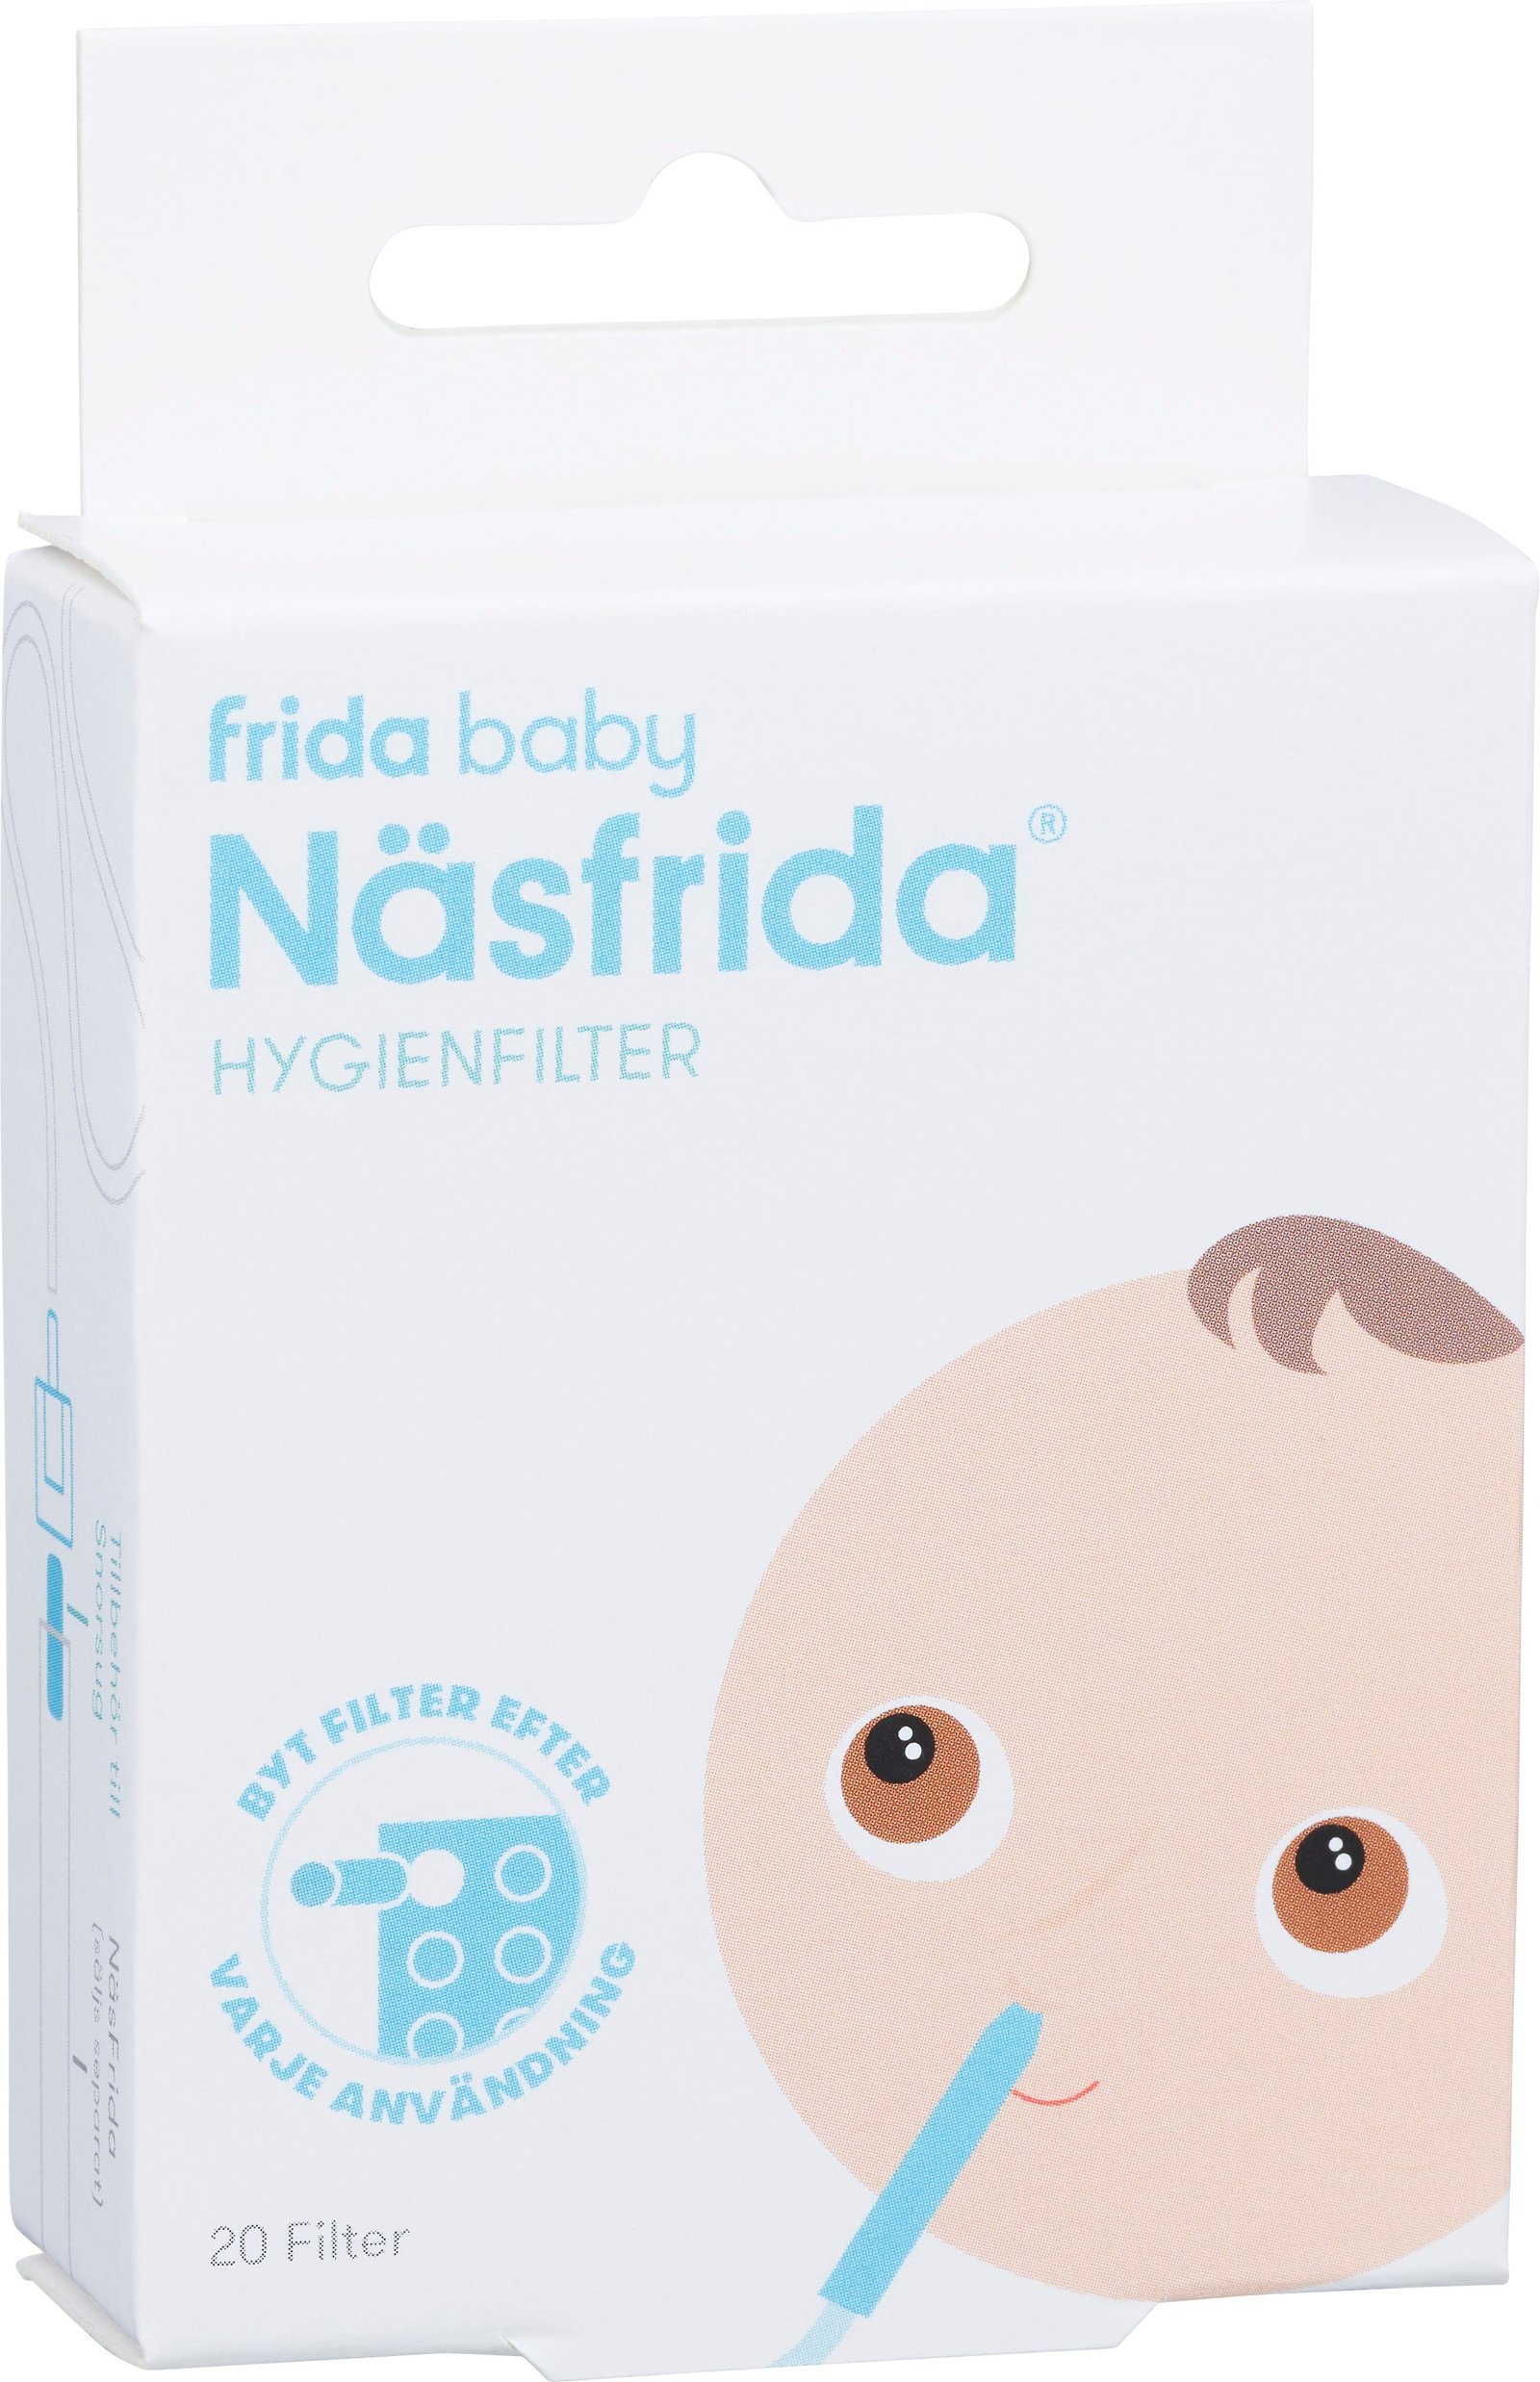 Frida baby Näsfrida Hygienfilter 20 st